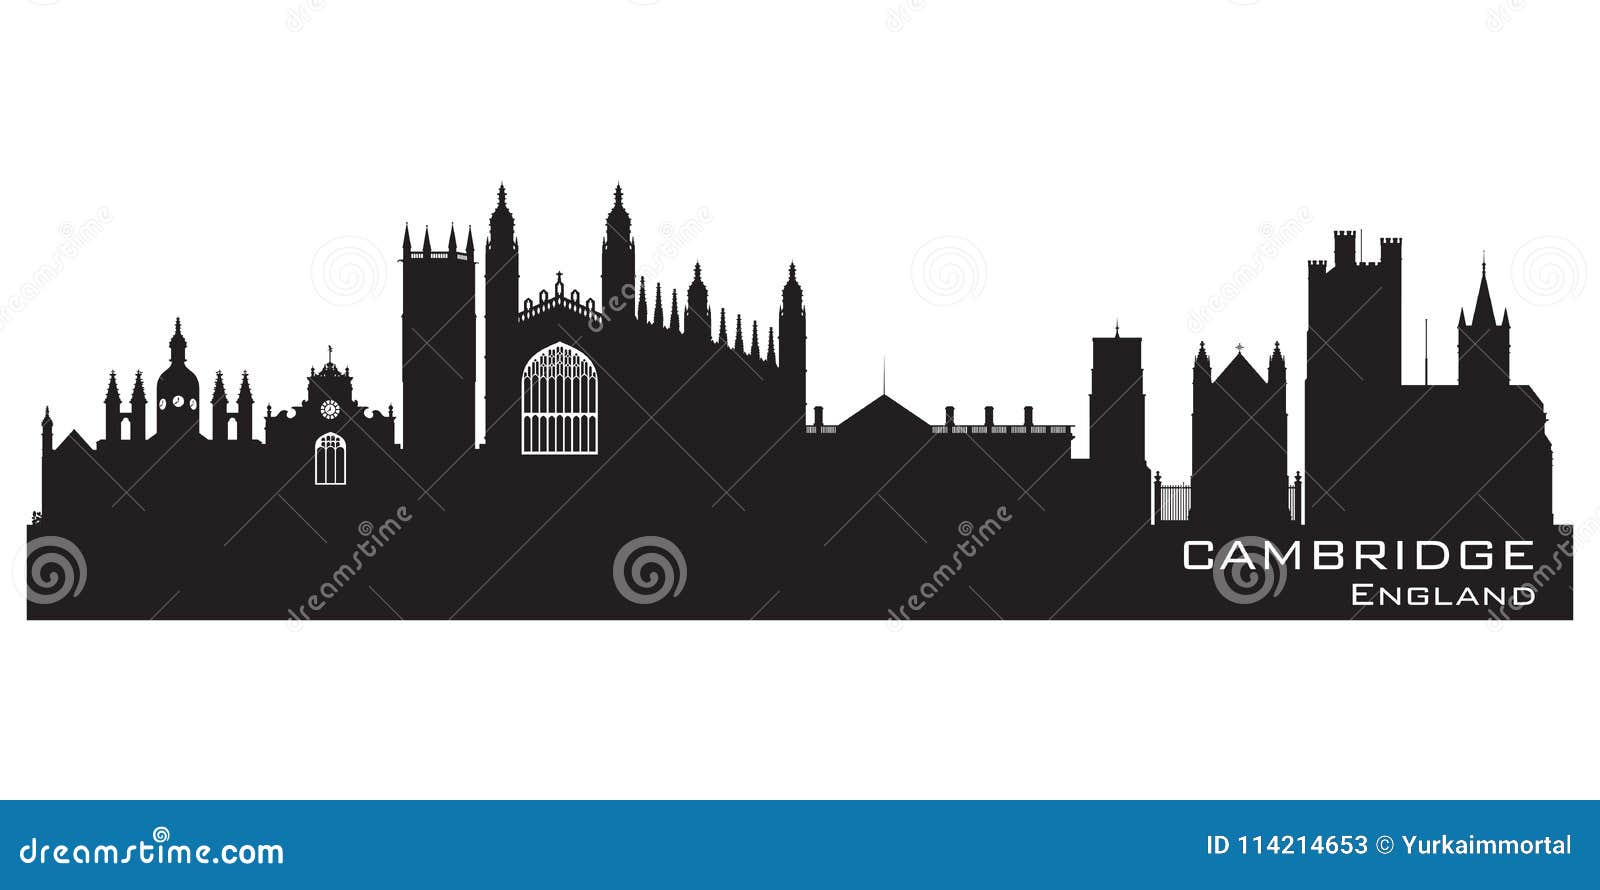 cambridge england city skyline detailed silhouette